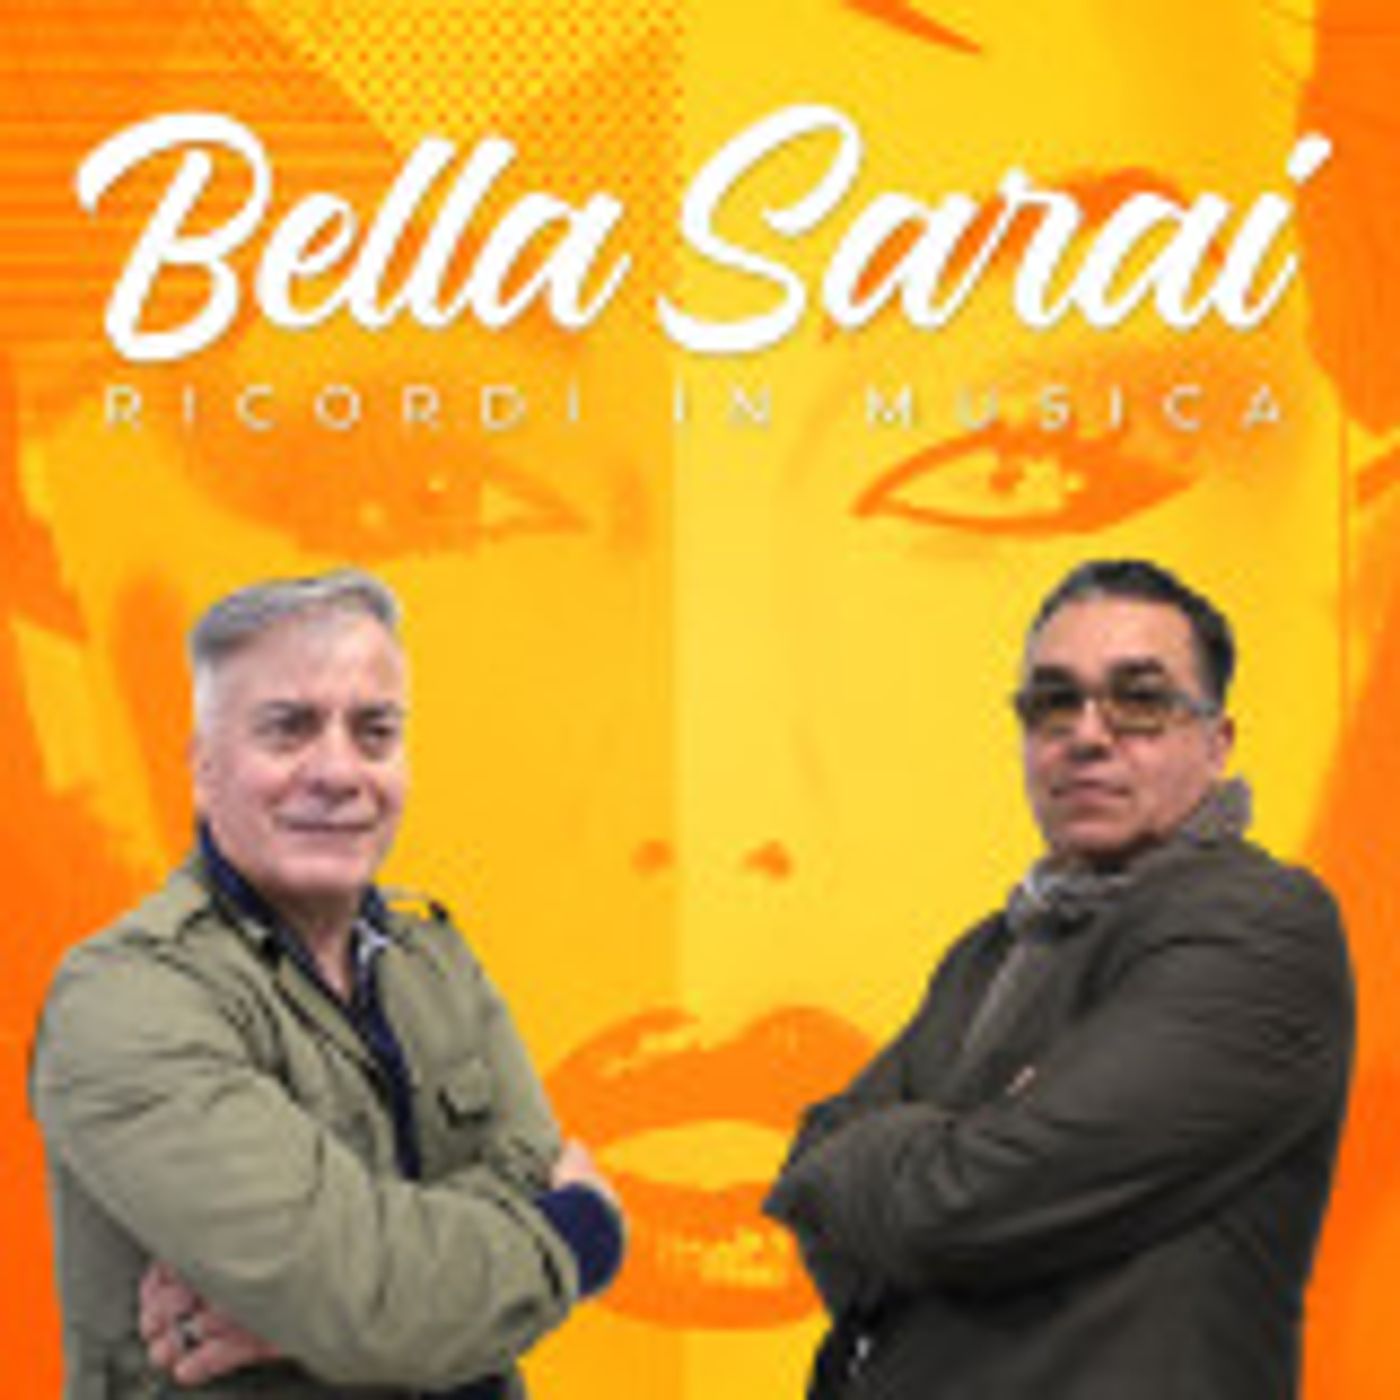 Bella Sarai... Ricordi in musica #15 (replica)